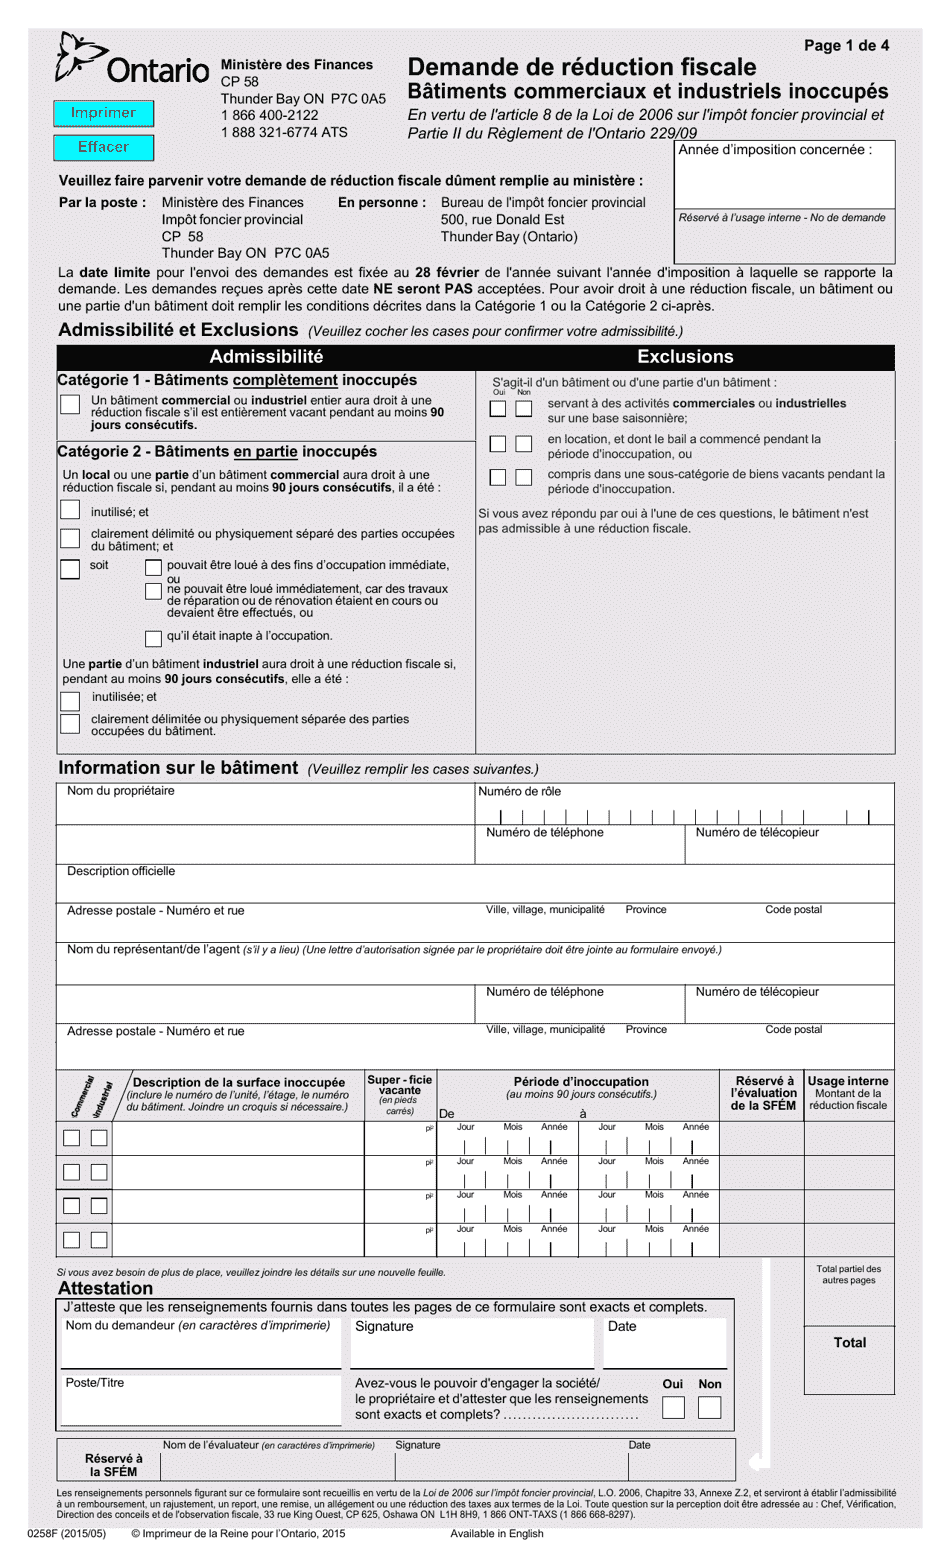 Forme 0258F Demande De Reduction Fiscale Batiments Commerciaux Et Industriels Inoccupes - Ontario, Canada (French), Page 1